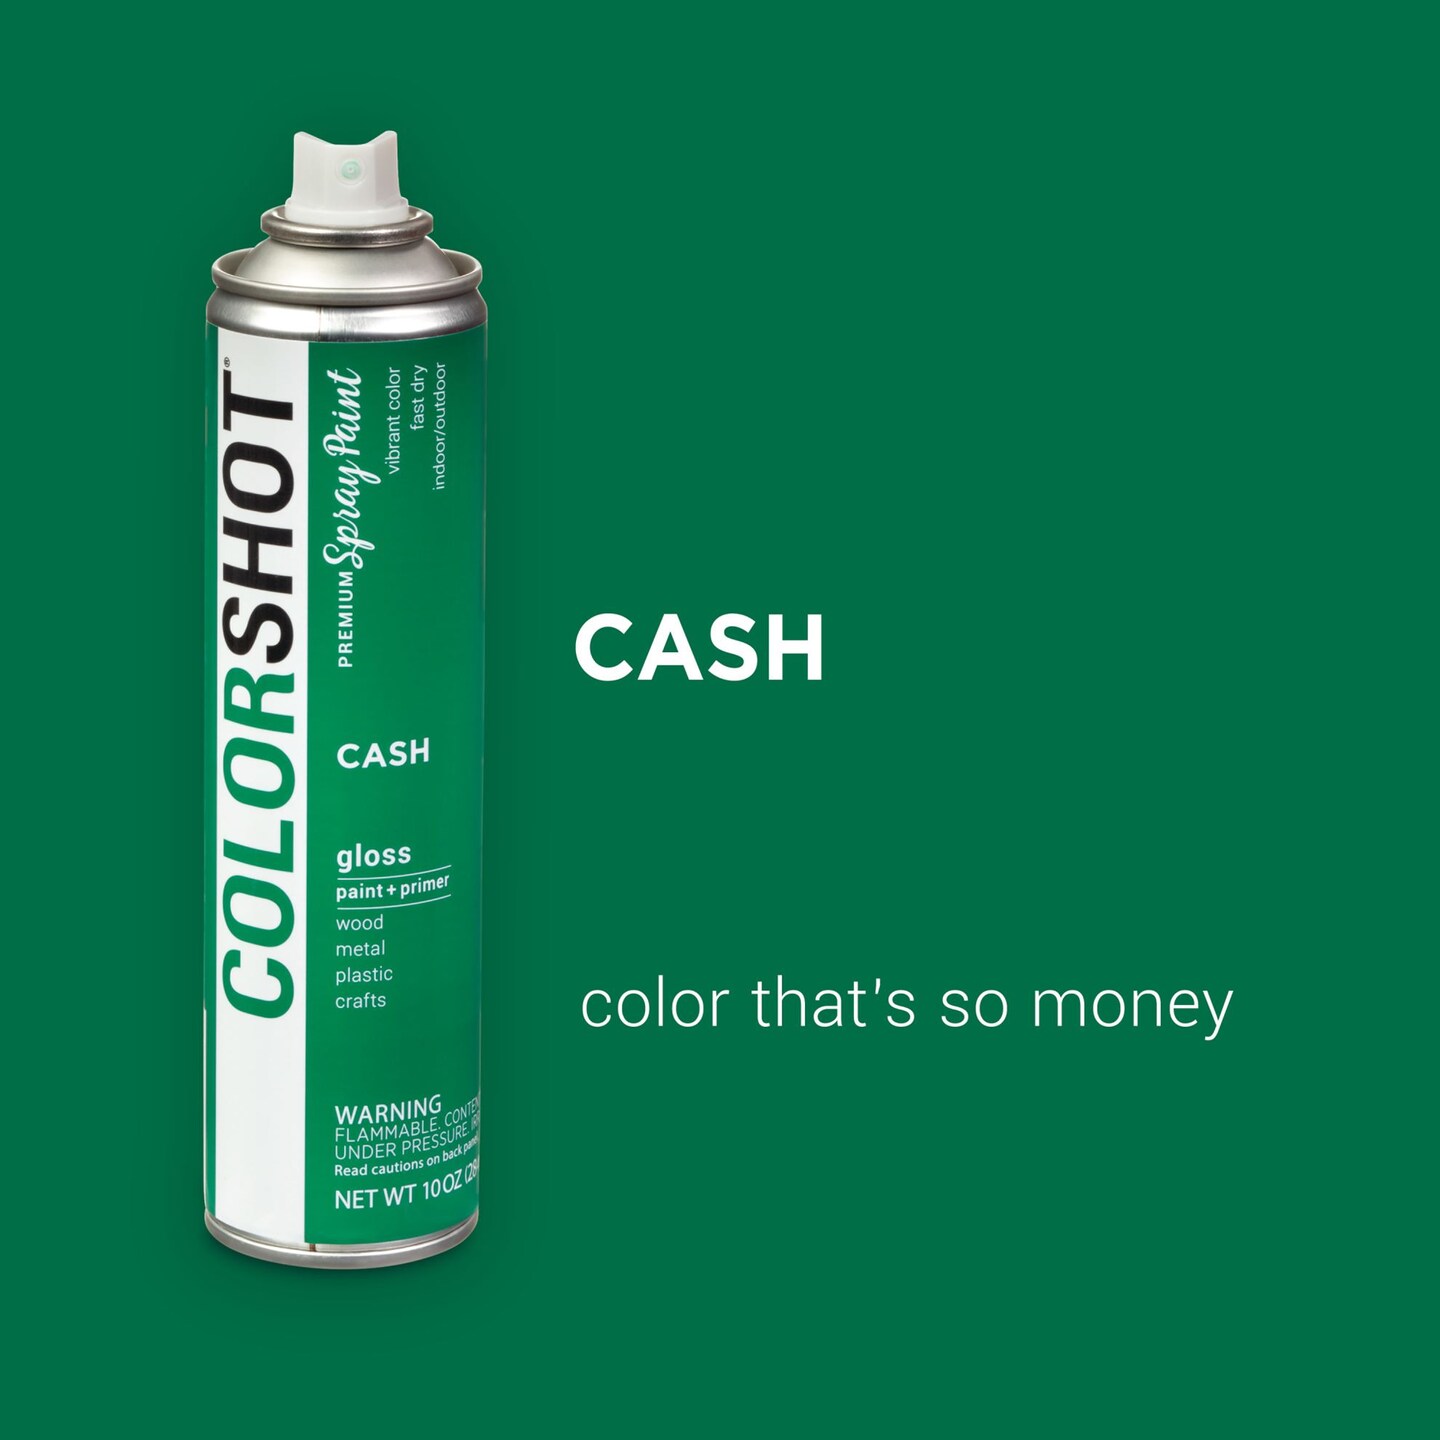 COLORSHOT Gloss Spray Paint Cash (Green) 10 oz. 4 Pack